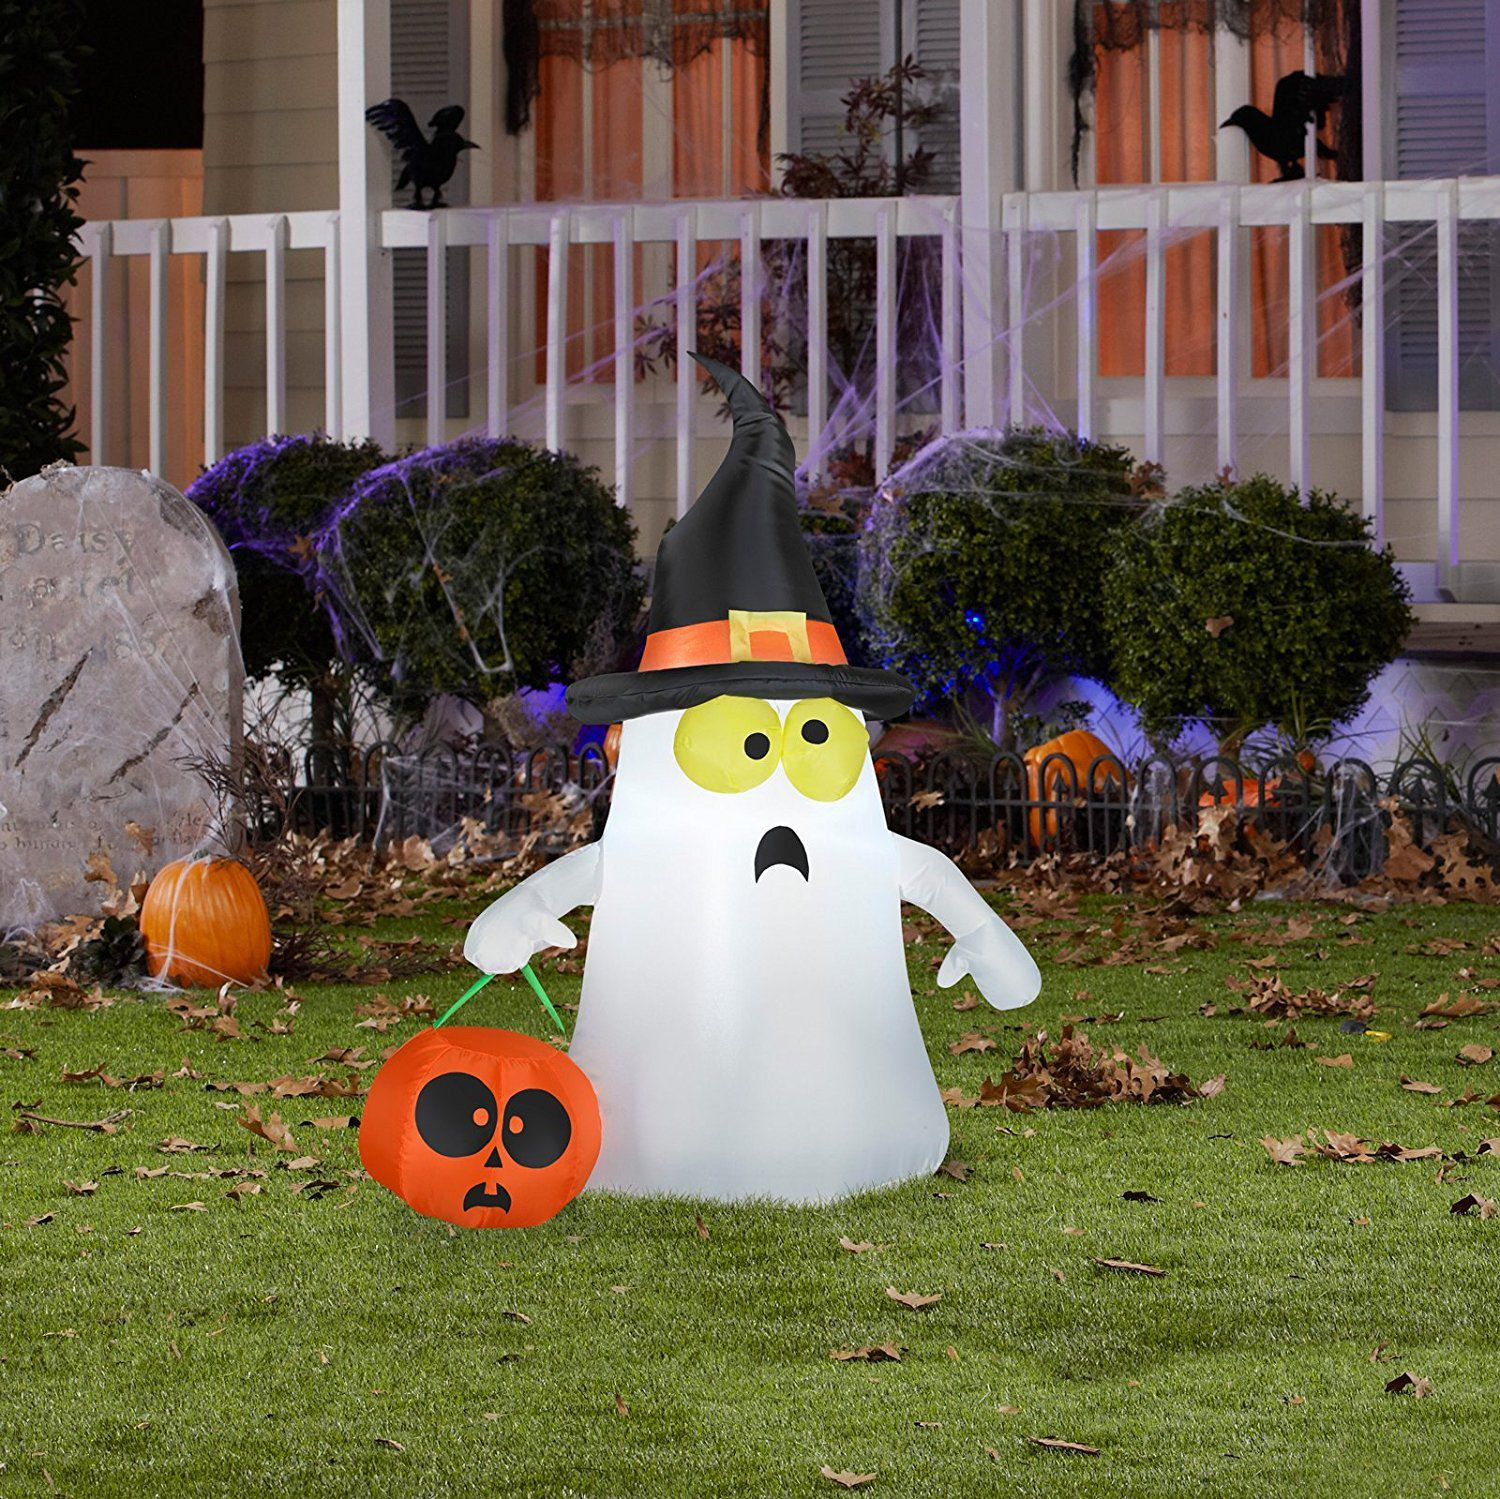 Backyard Halloween Decorations
 The 13 Best Outdoor Halloween Decorations of 2020